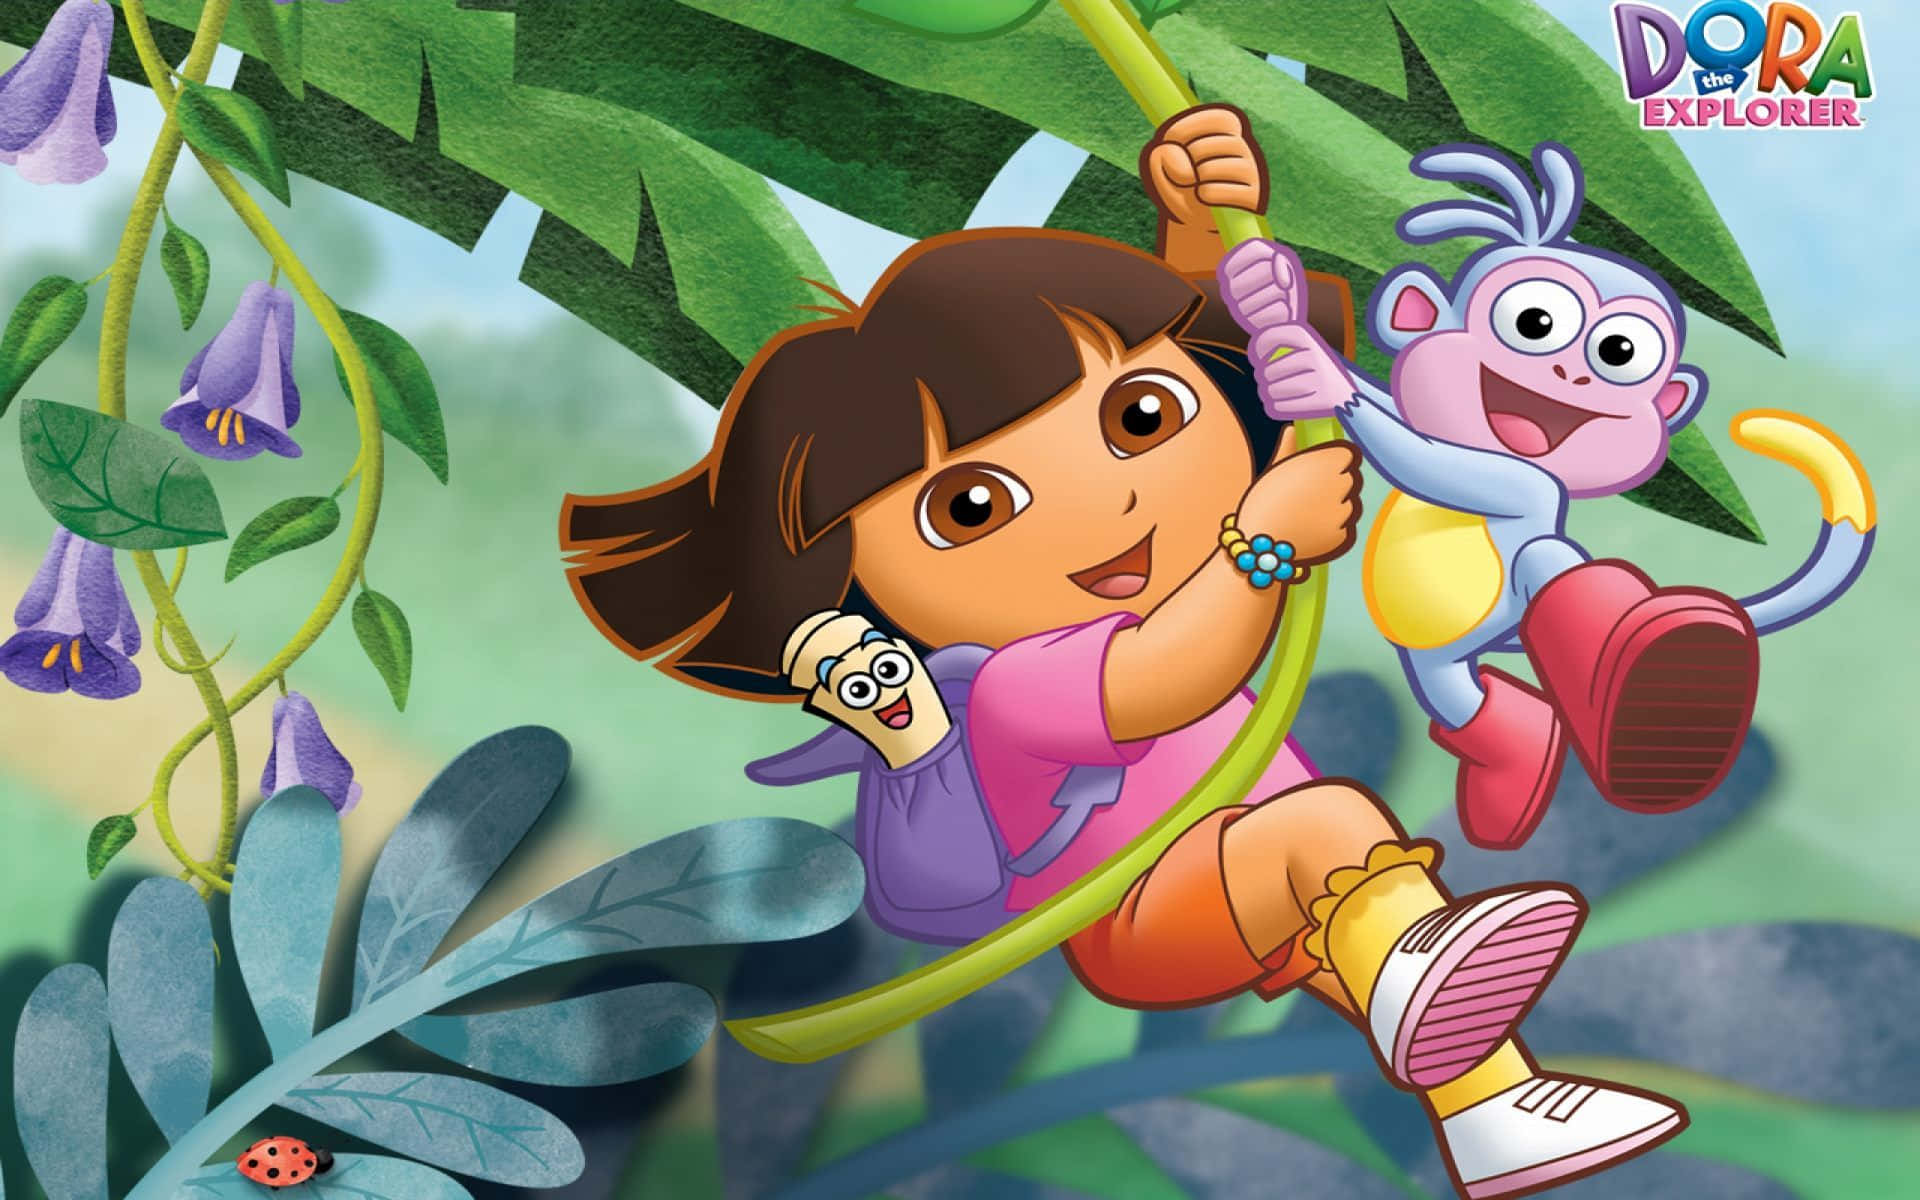 Dora,a Exploradora Está Pronta Para A Aventura!